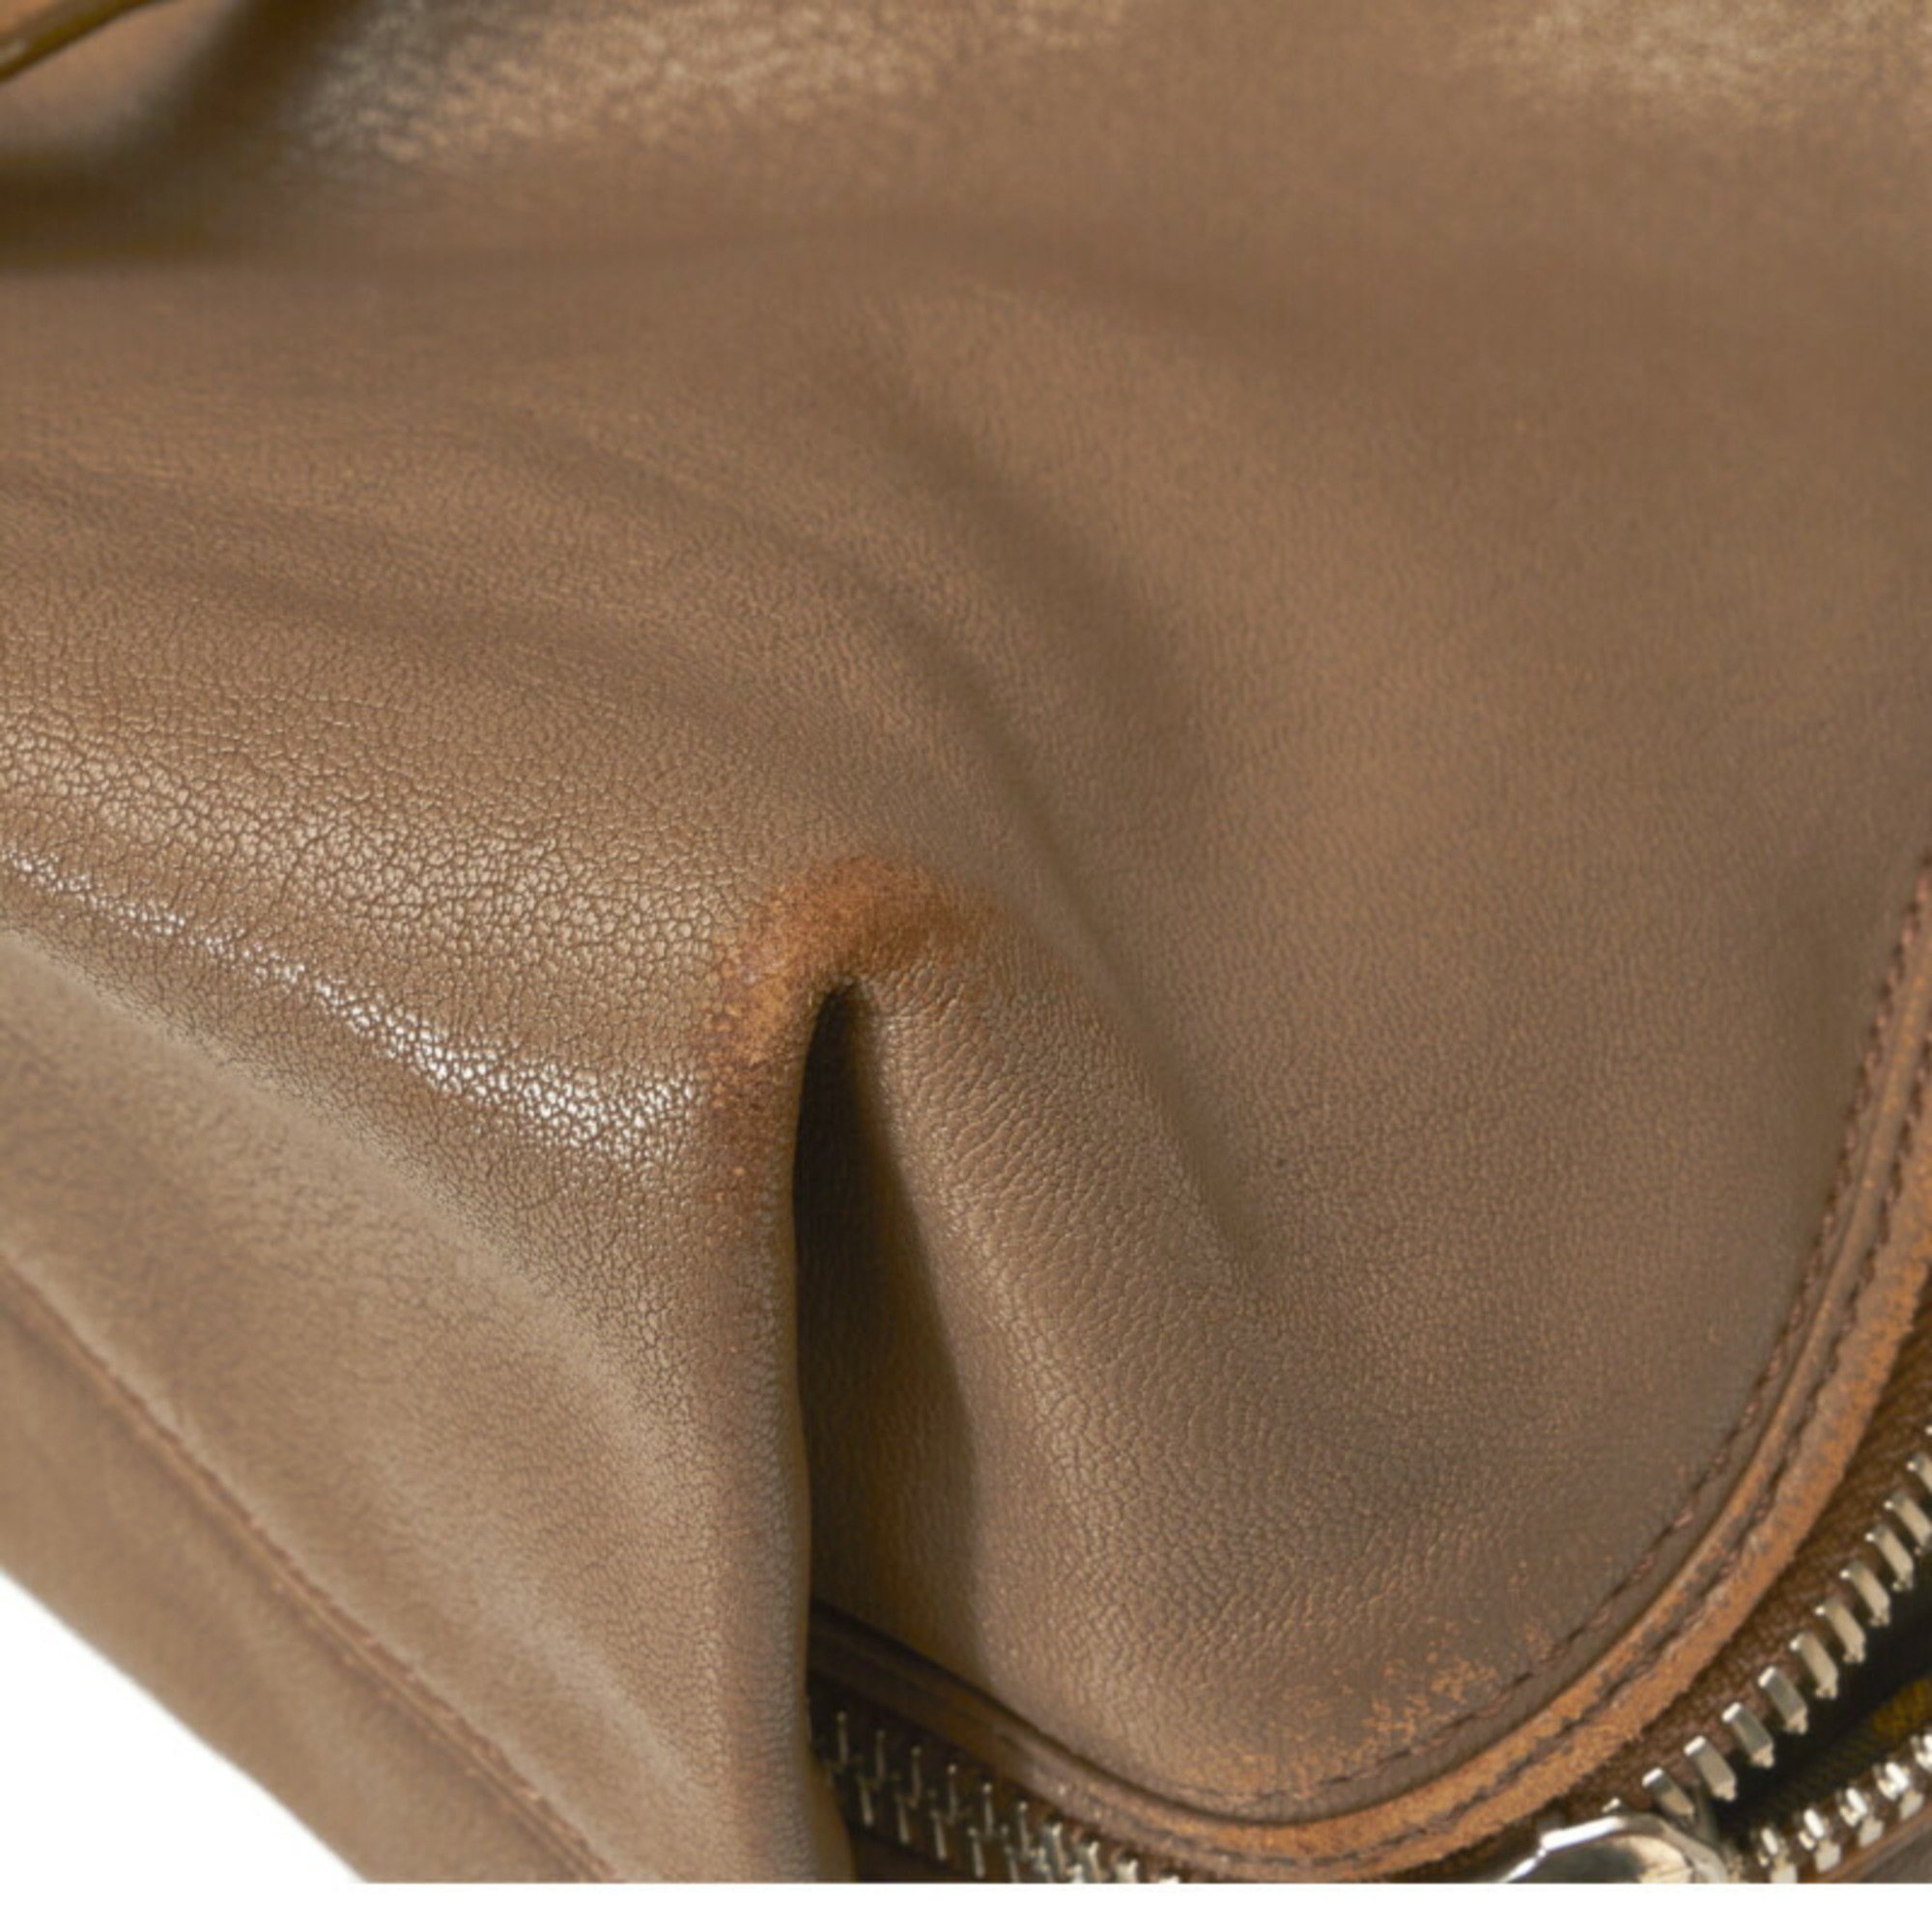 FENDI Zucca Unzipped Handbag Boston Bag 8BR623 Beige Leather Women's